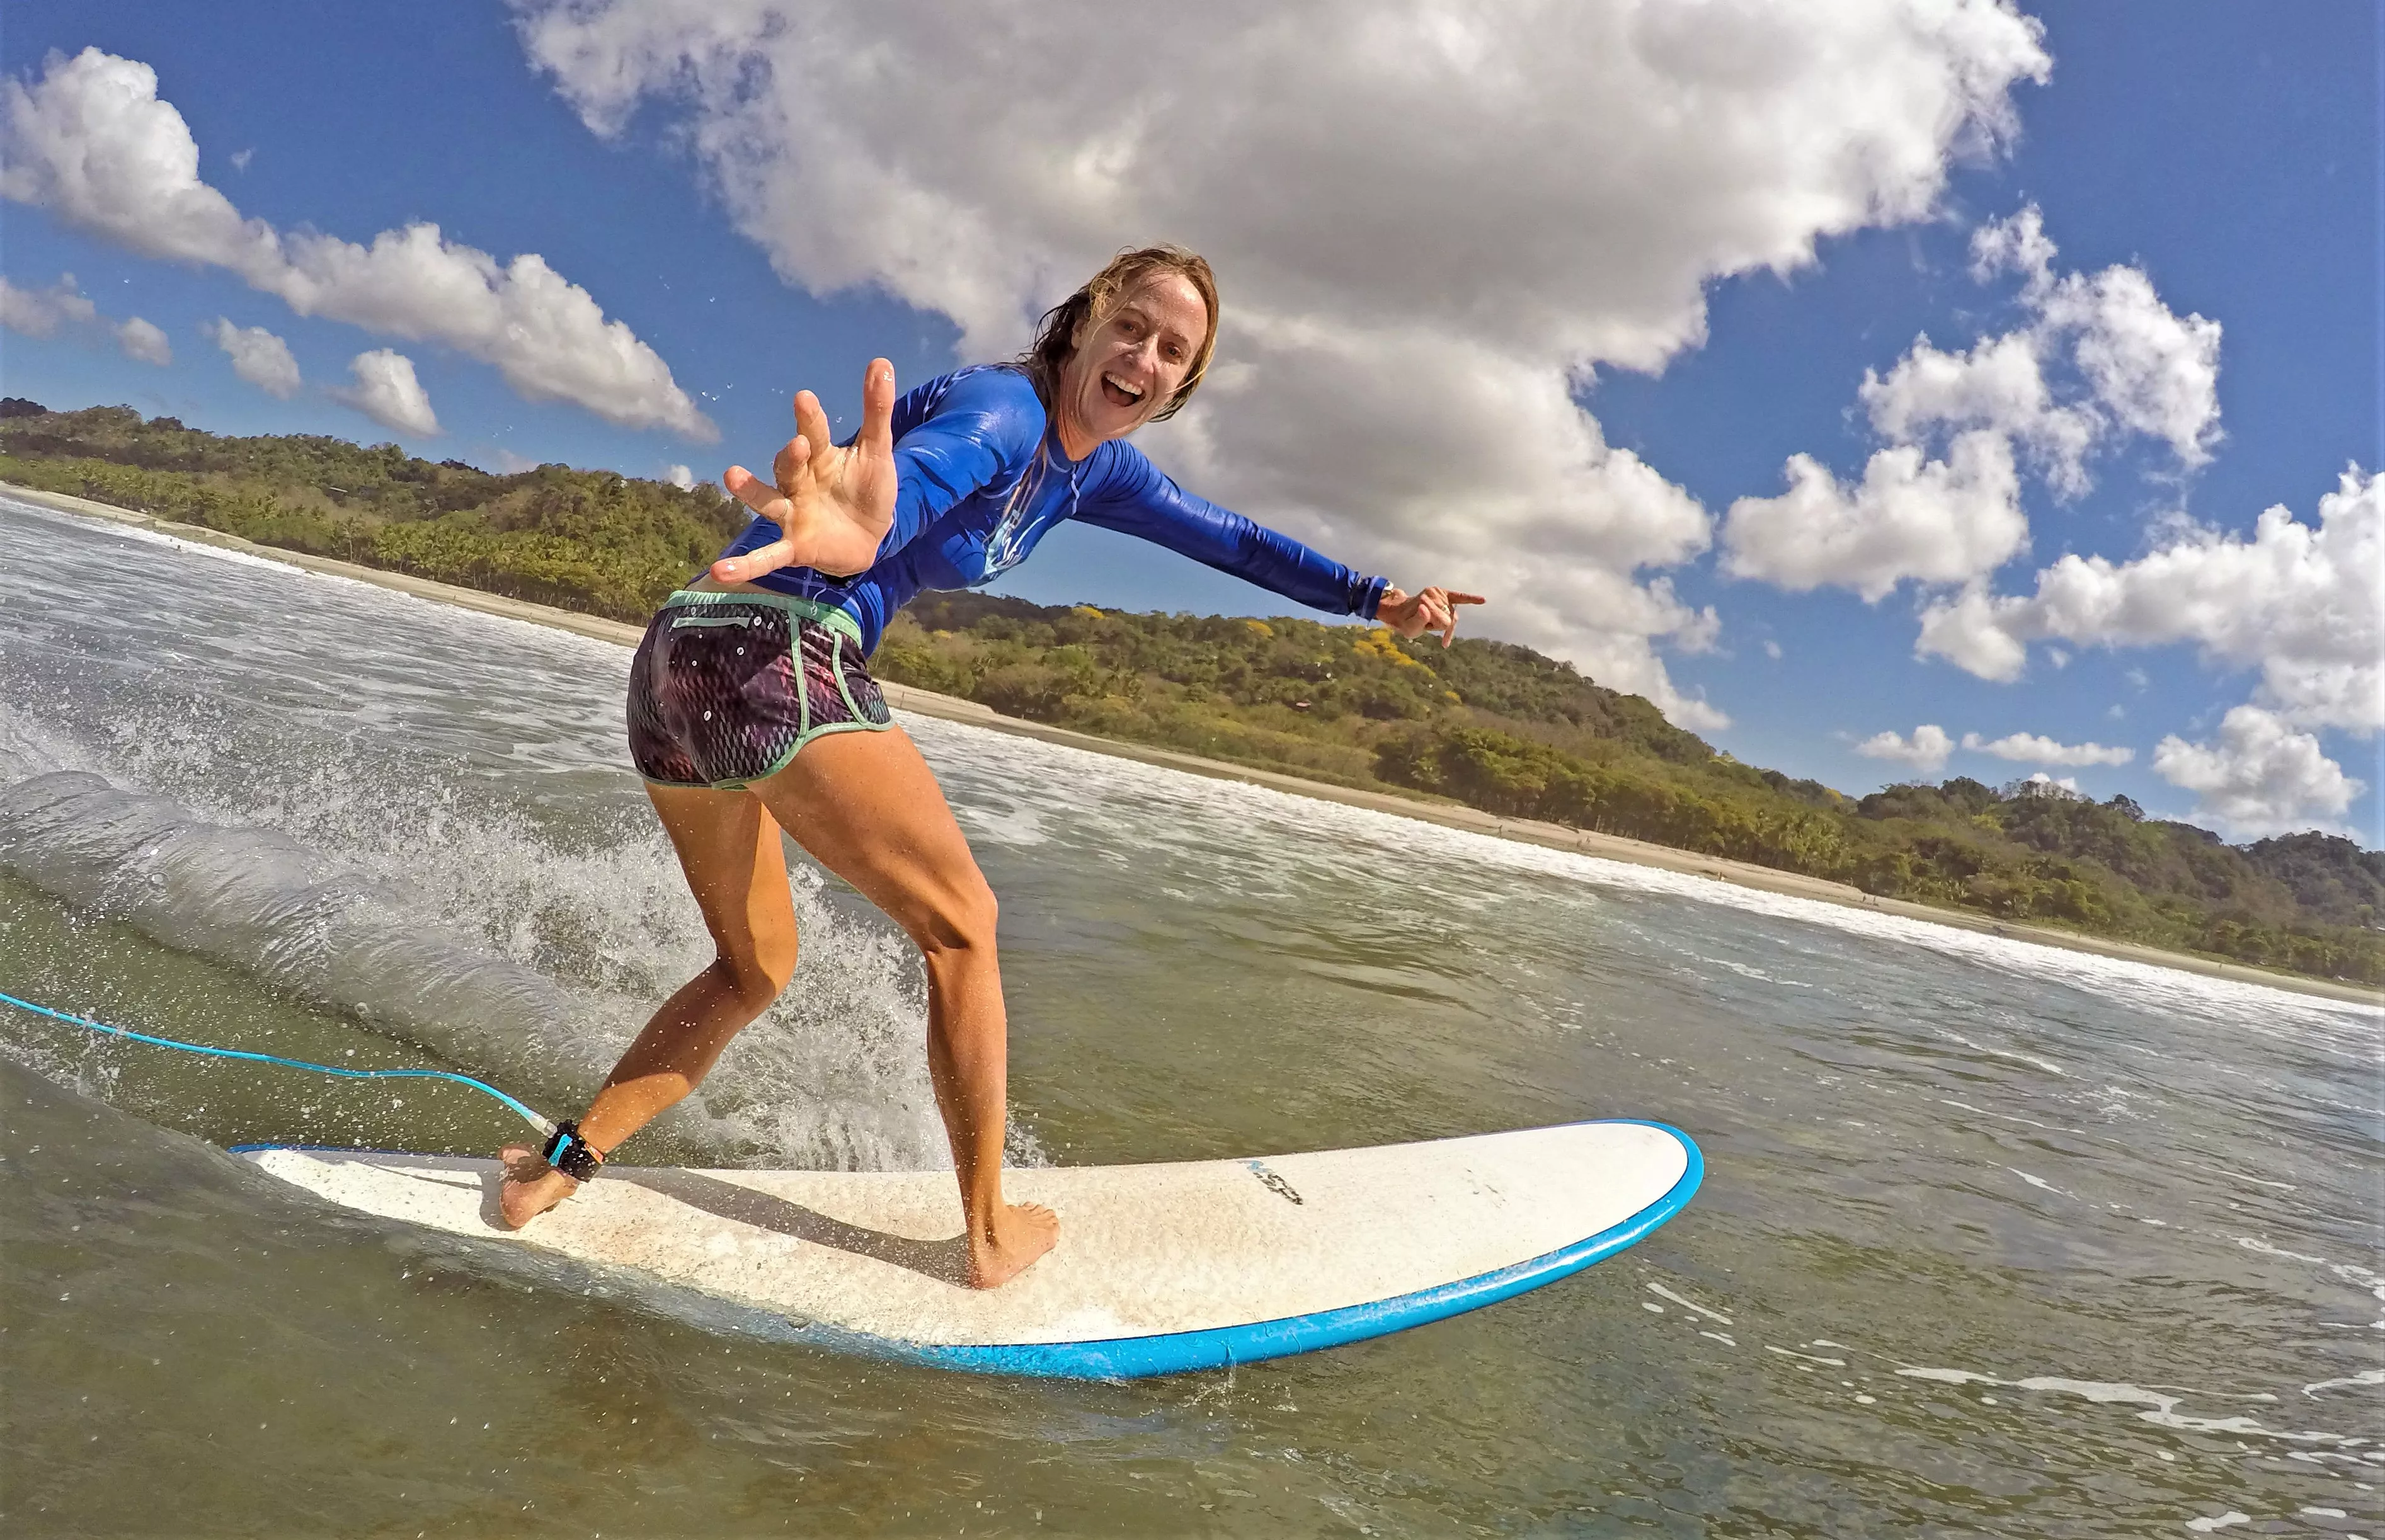 Pura Vida Surfers in Costa Rica, North America | Surfing - Rated 4